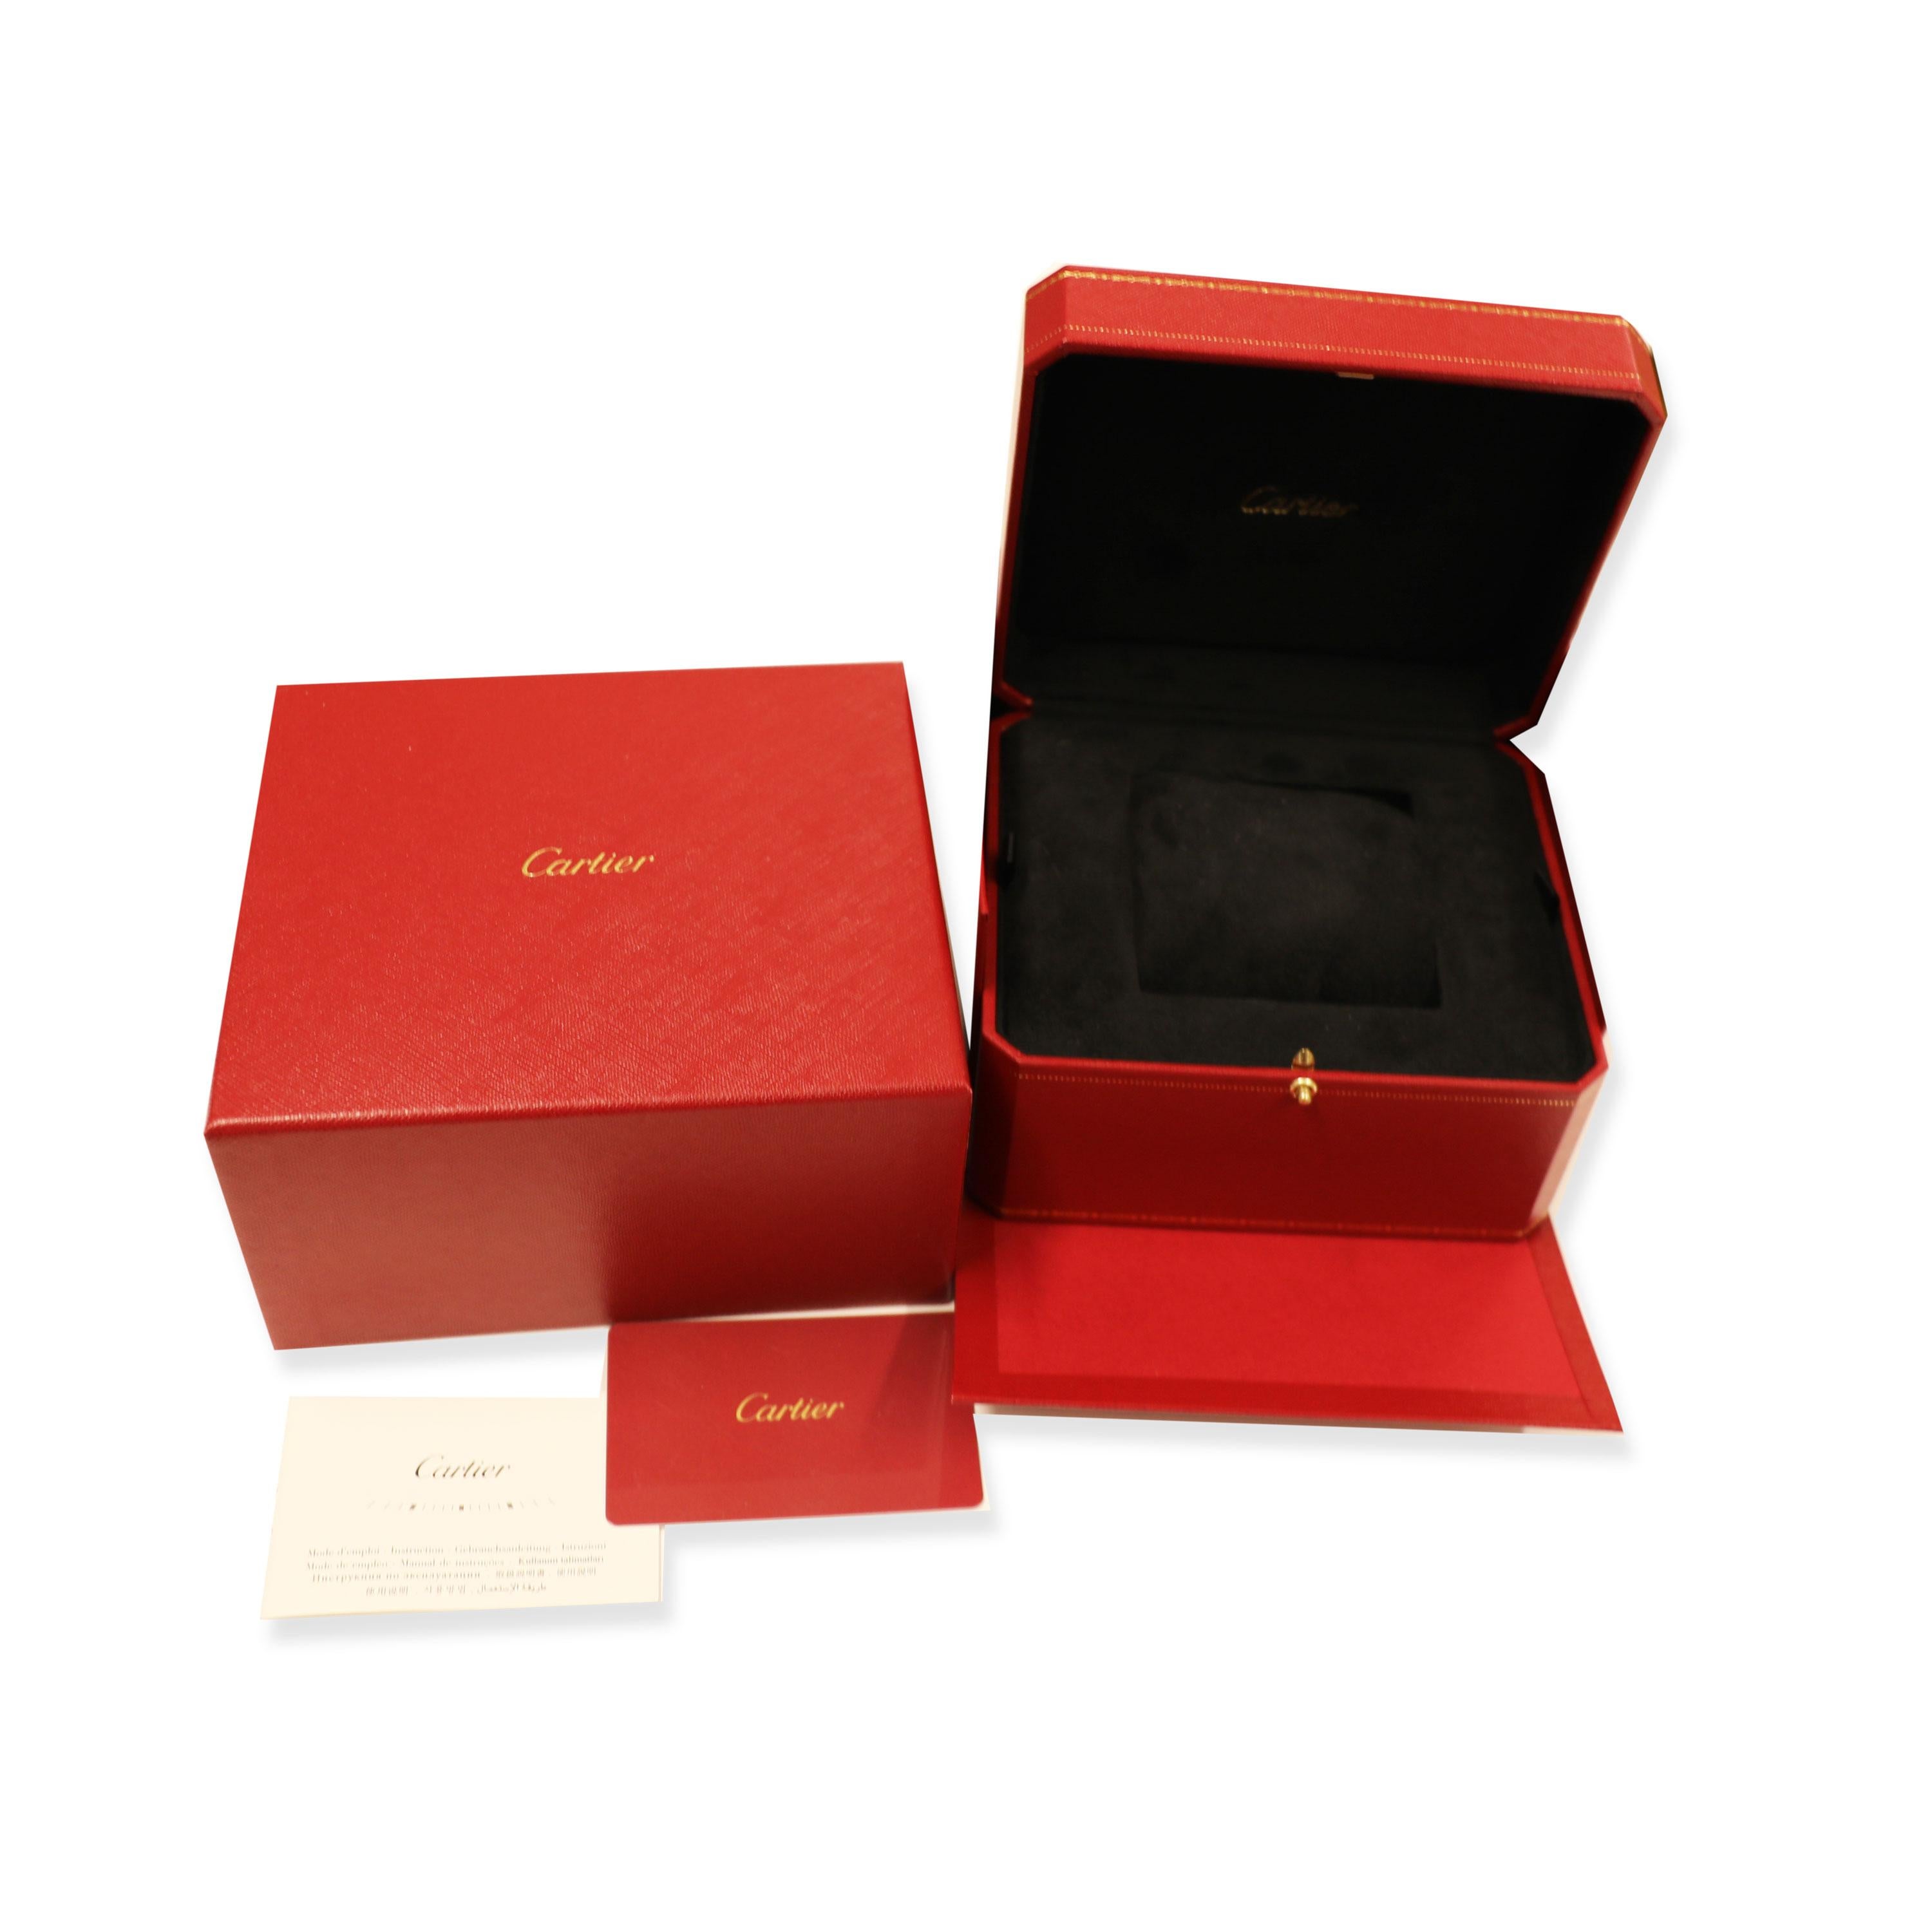 Cartier Cle de Cartier W2CL0002 Men's Watch in 18kt Stainless Steel/Rose Gold 2